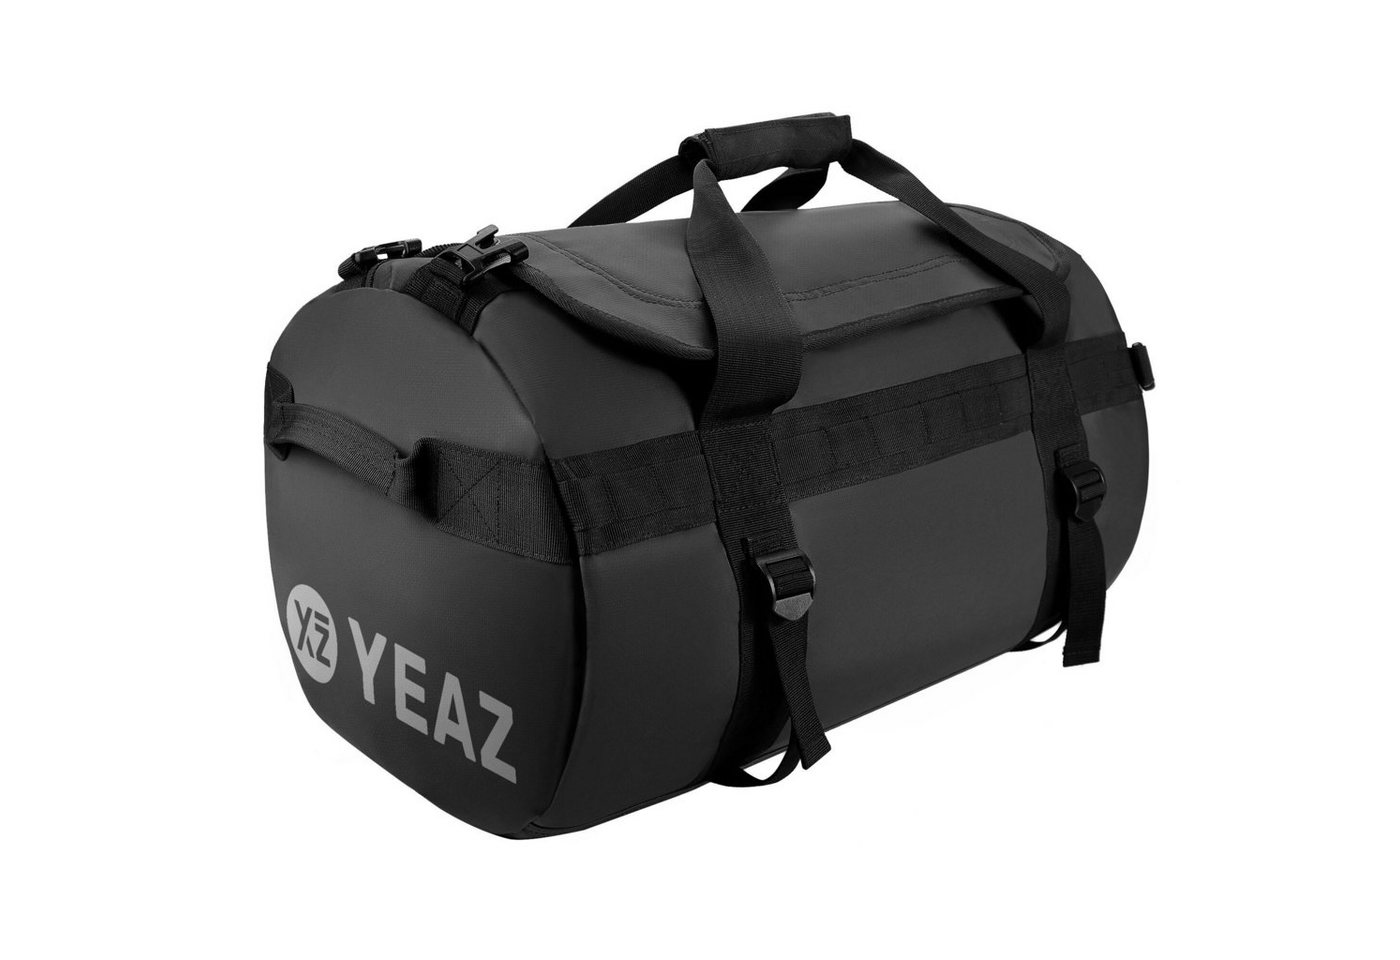 YEAZ Reisetasche HELSINKI duffle bag, Duffle Bag mit abnehmbaren Schulterriemen von YEAZ